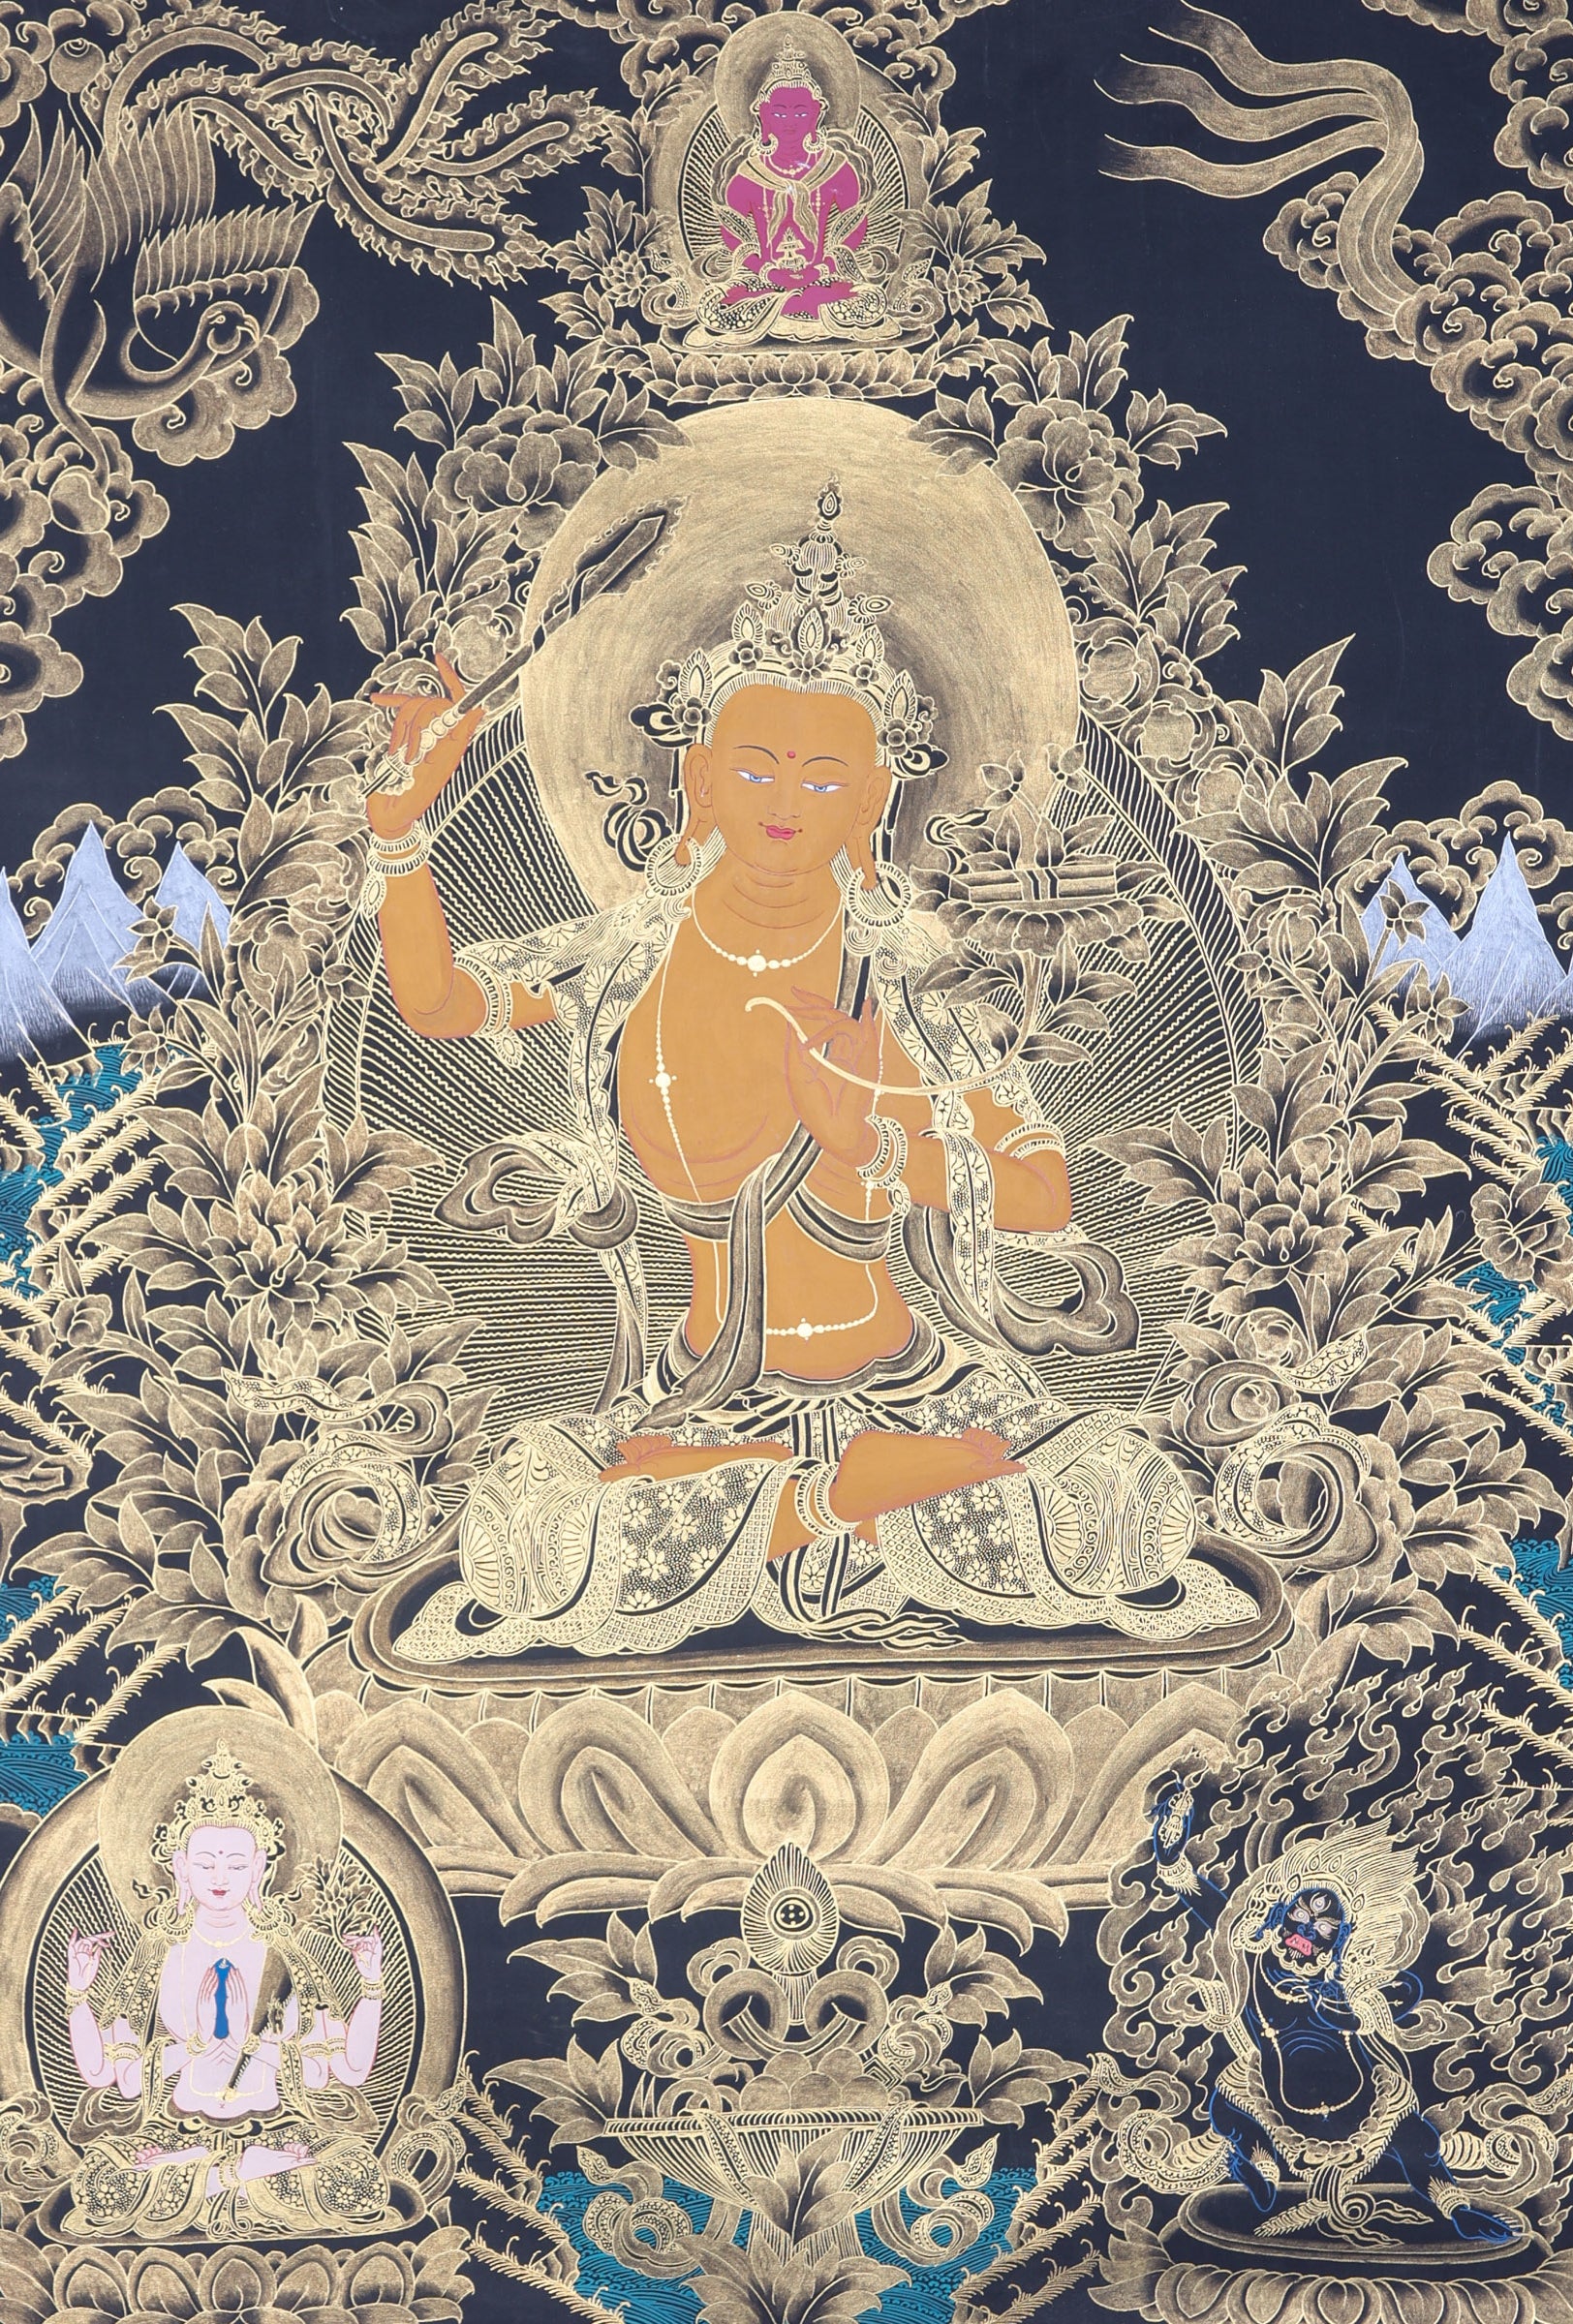 Manjushri Thangka Painting for wisdom.